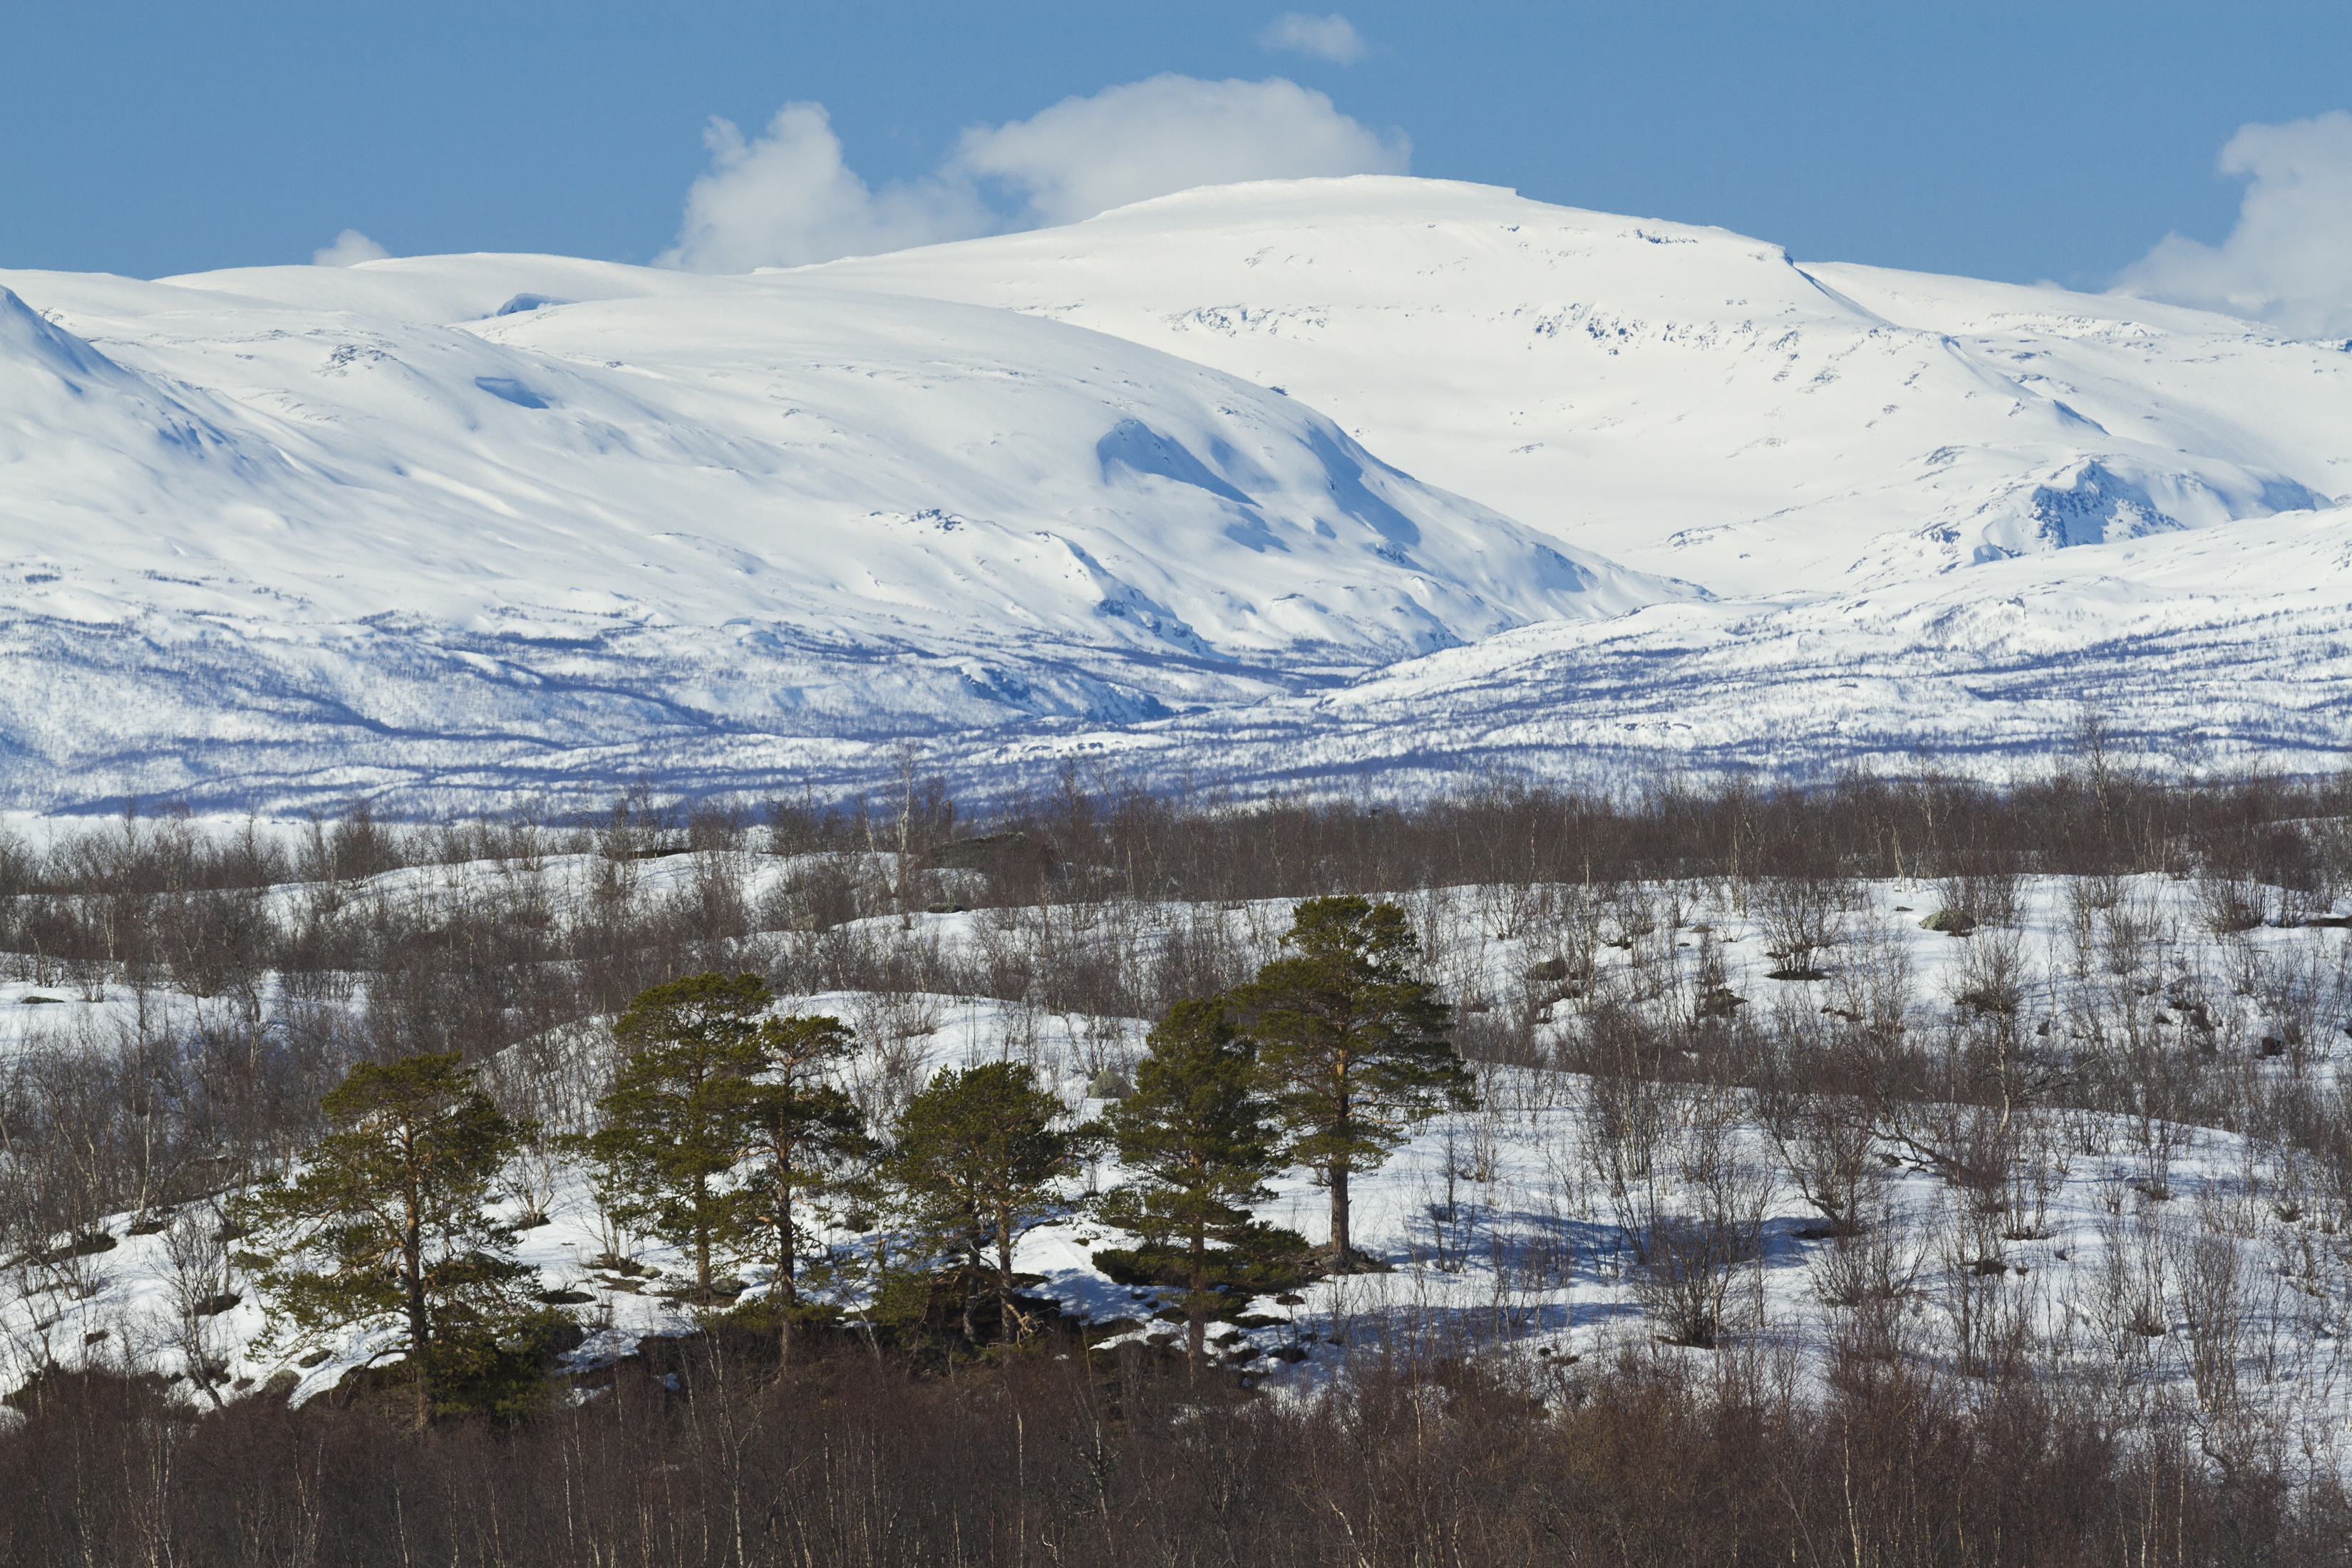 View to Riehppecohkka, Jalgesvárri and Sørdalen from Abisko, Norrbotten, Sweden, 2015 April